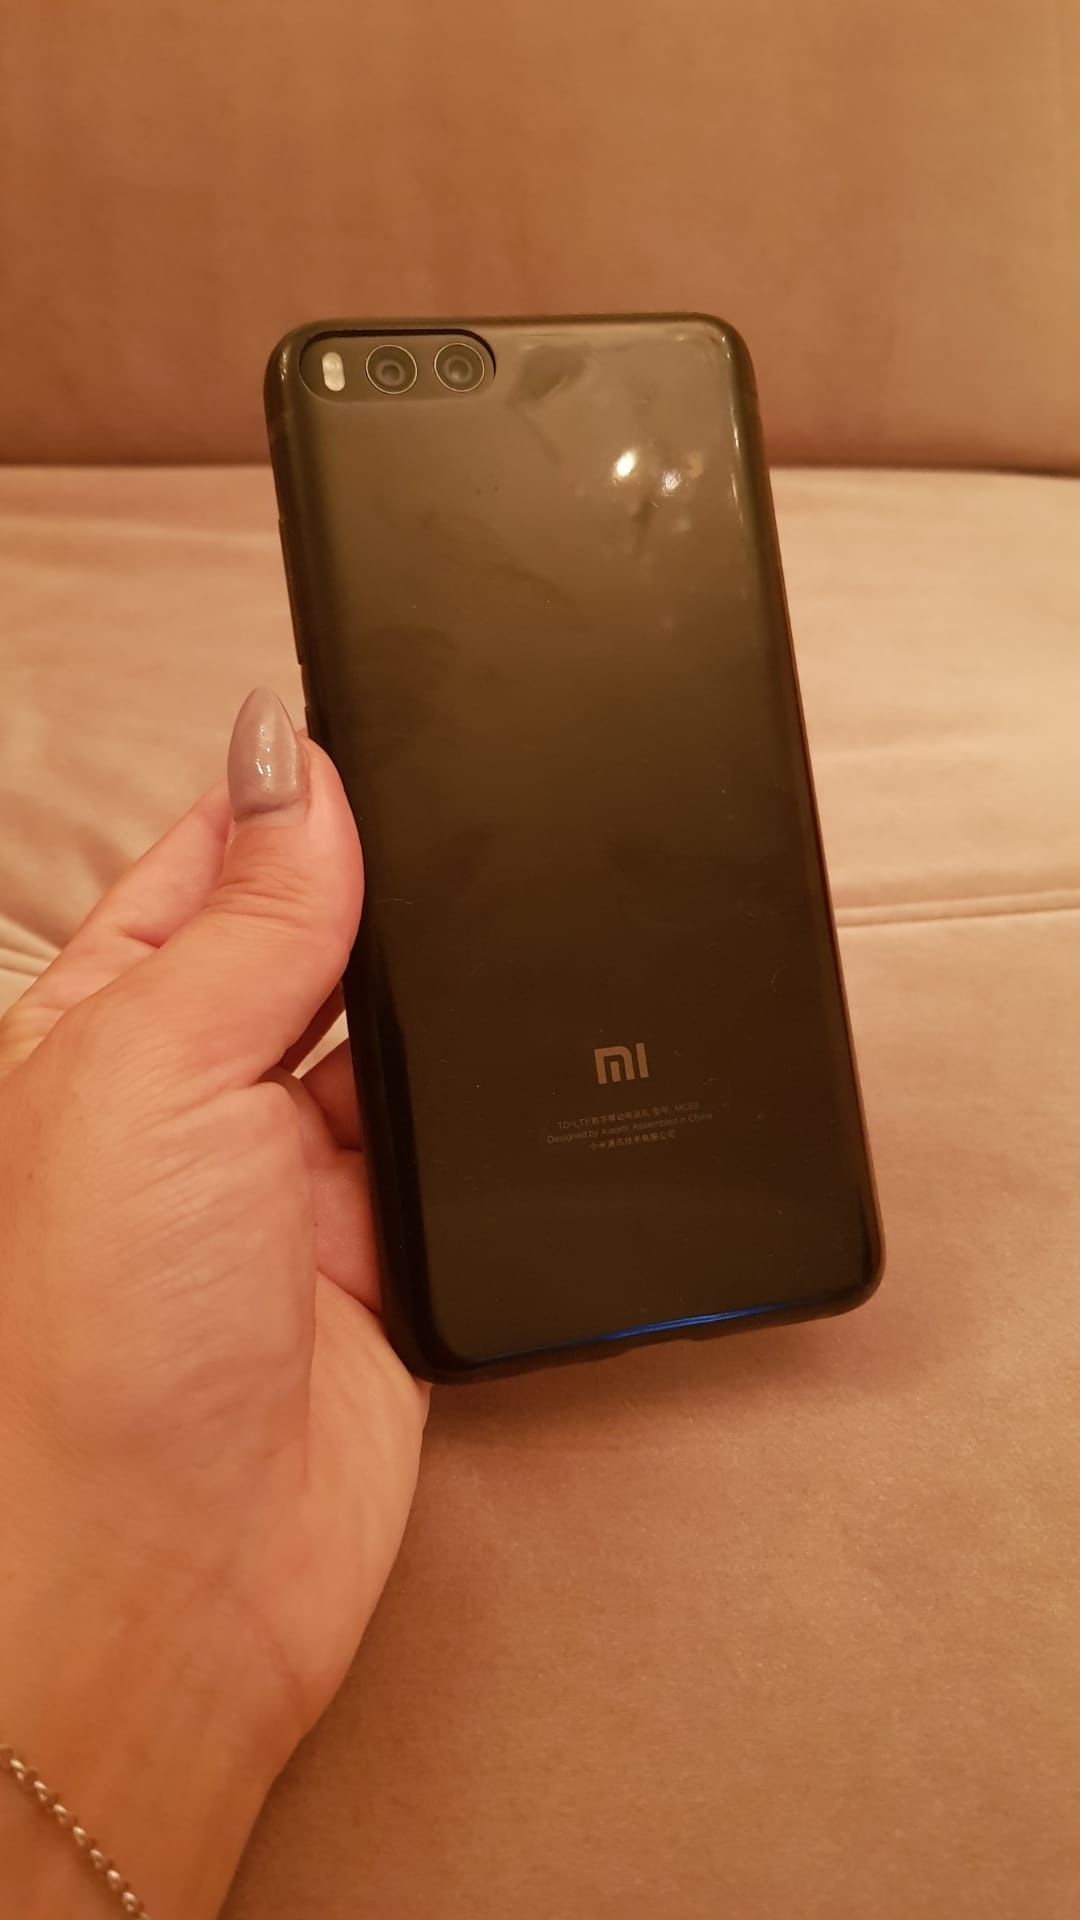 Telemóvel Xiaomi Mi Note 3 Dual Sim e Desbloqueado